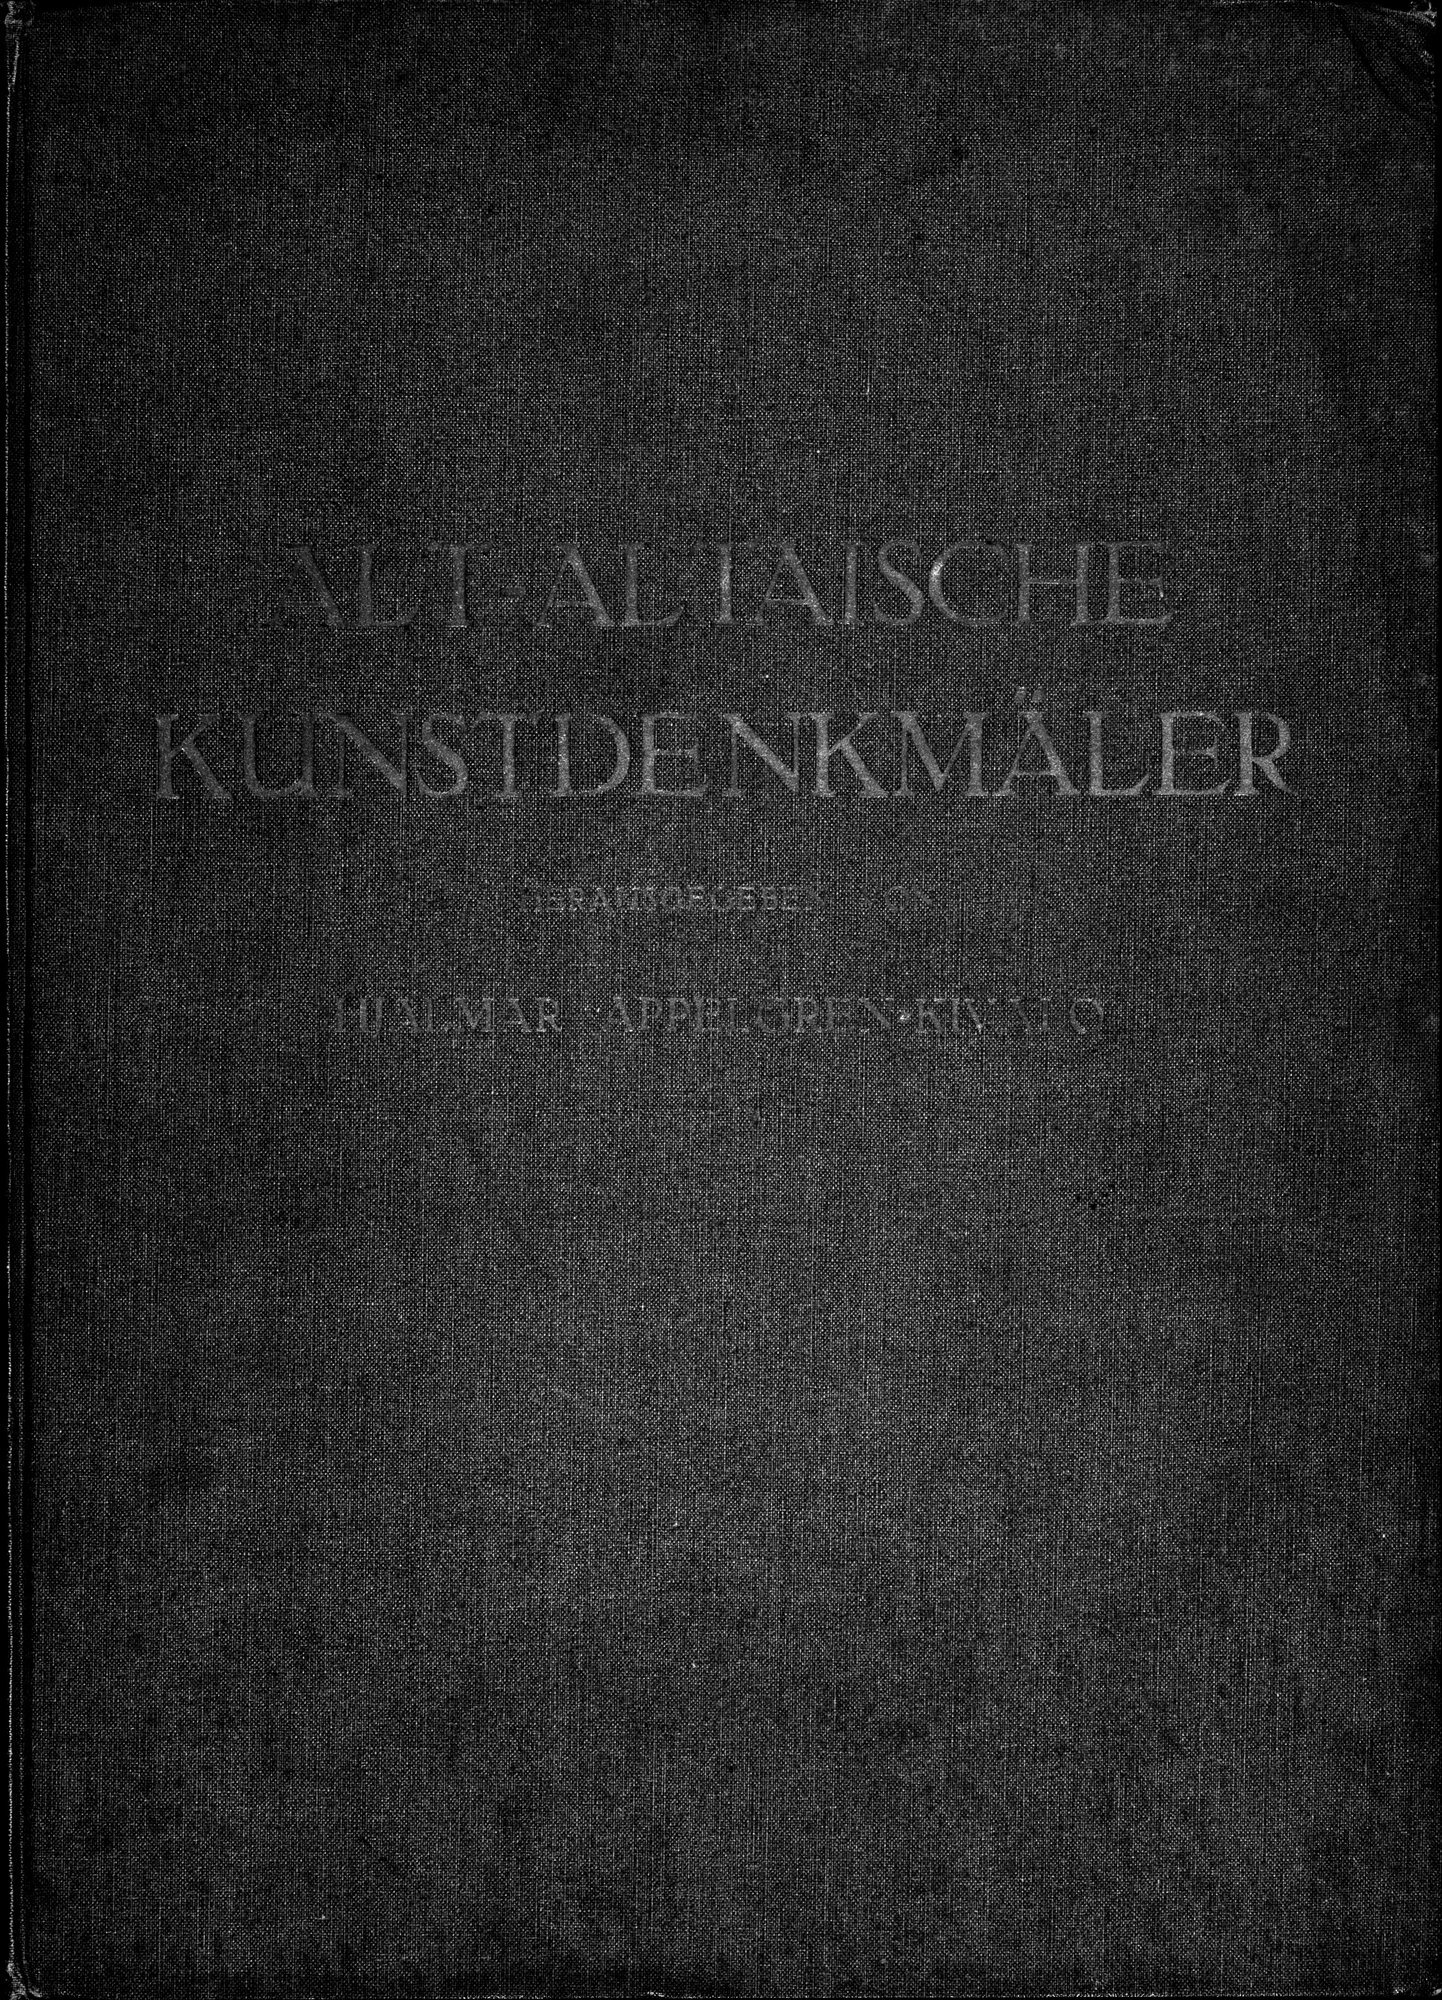 Alt-Altaische Kunstdenkmäler : vol.1 / Page 1 (Grayscale High Resolution Image)